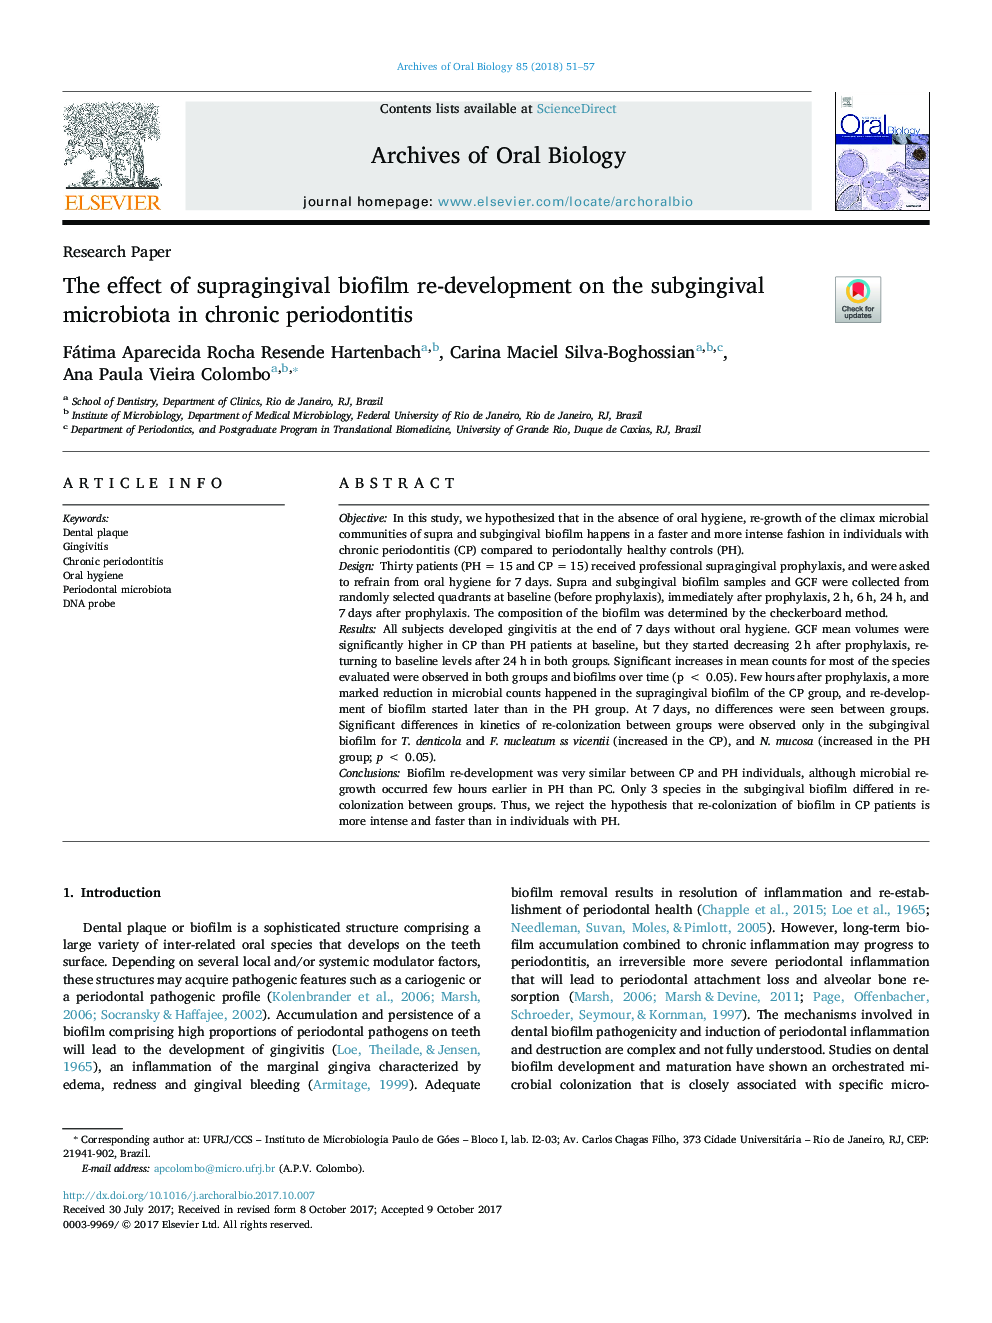 The effect of supragingival biofilm re-development on the subgingival microbiota in chronic periodontitis